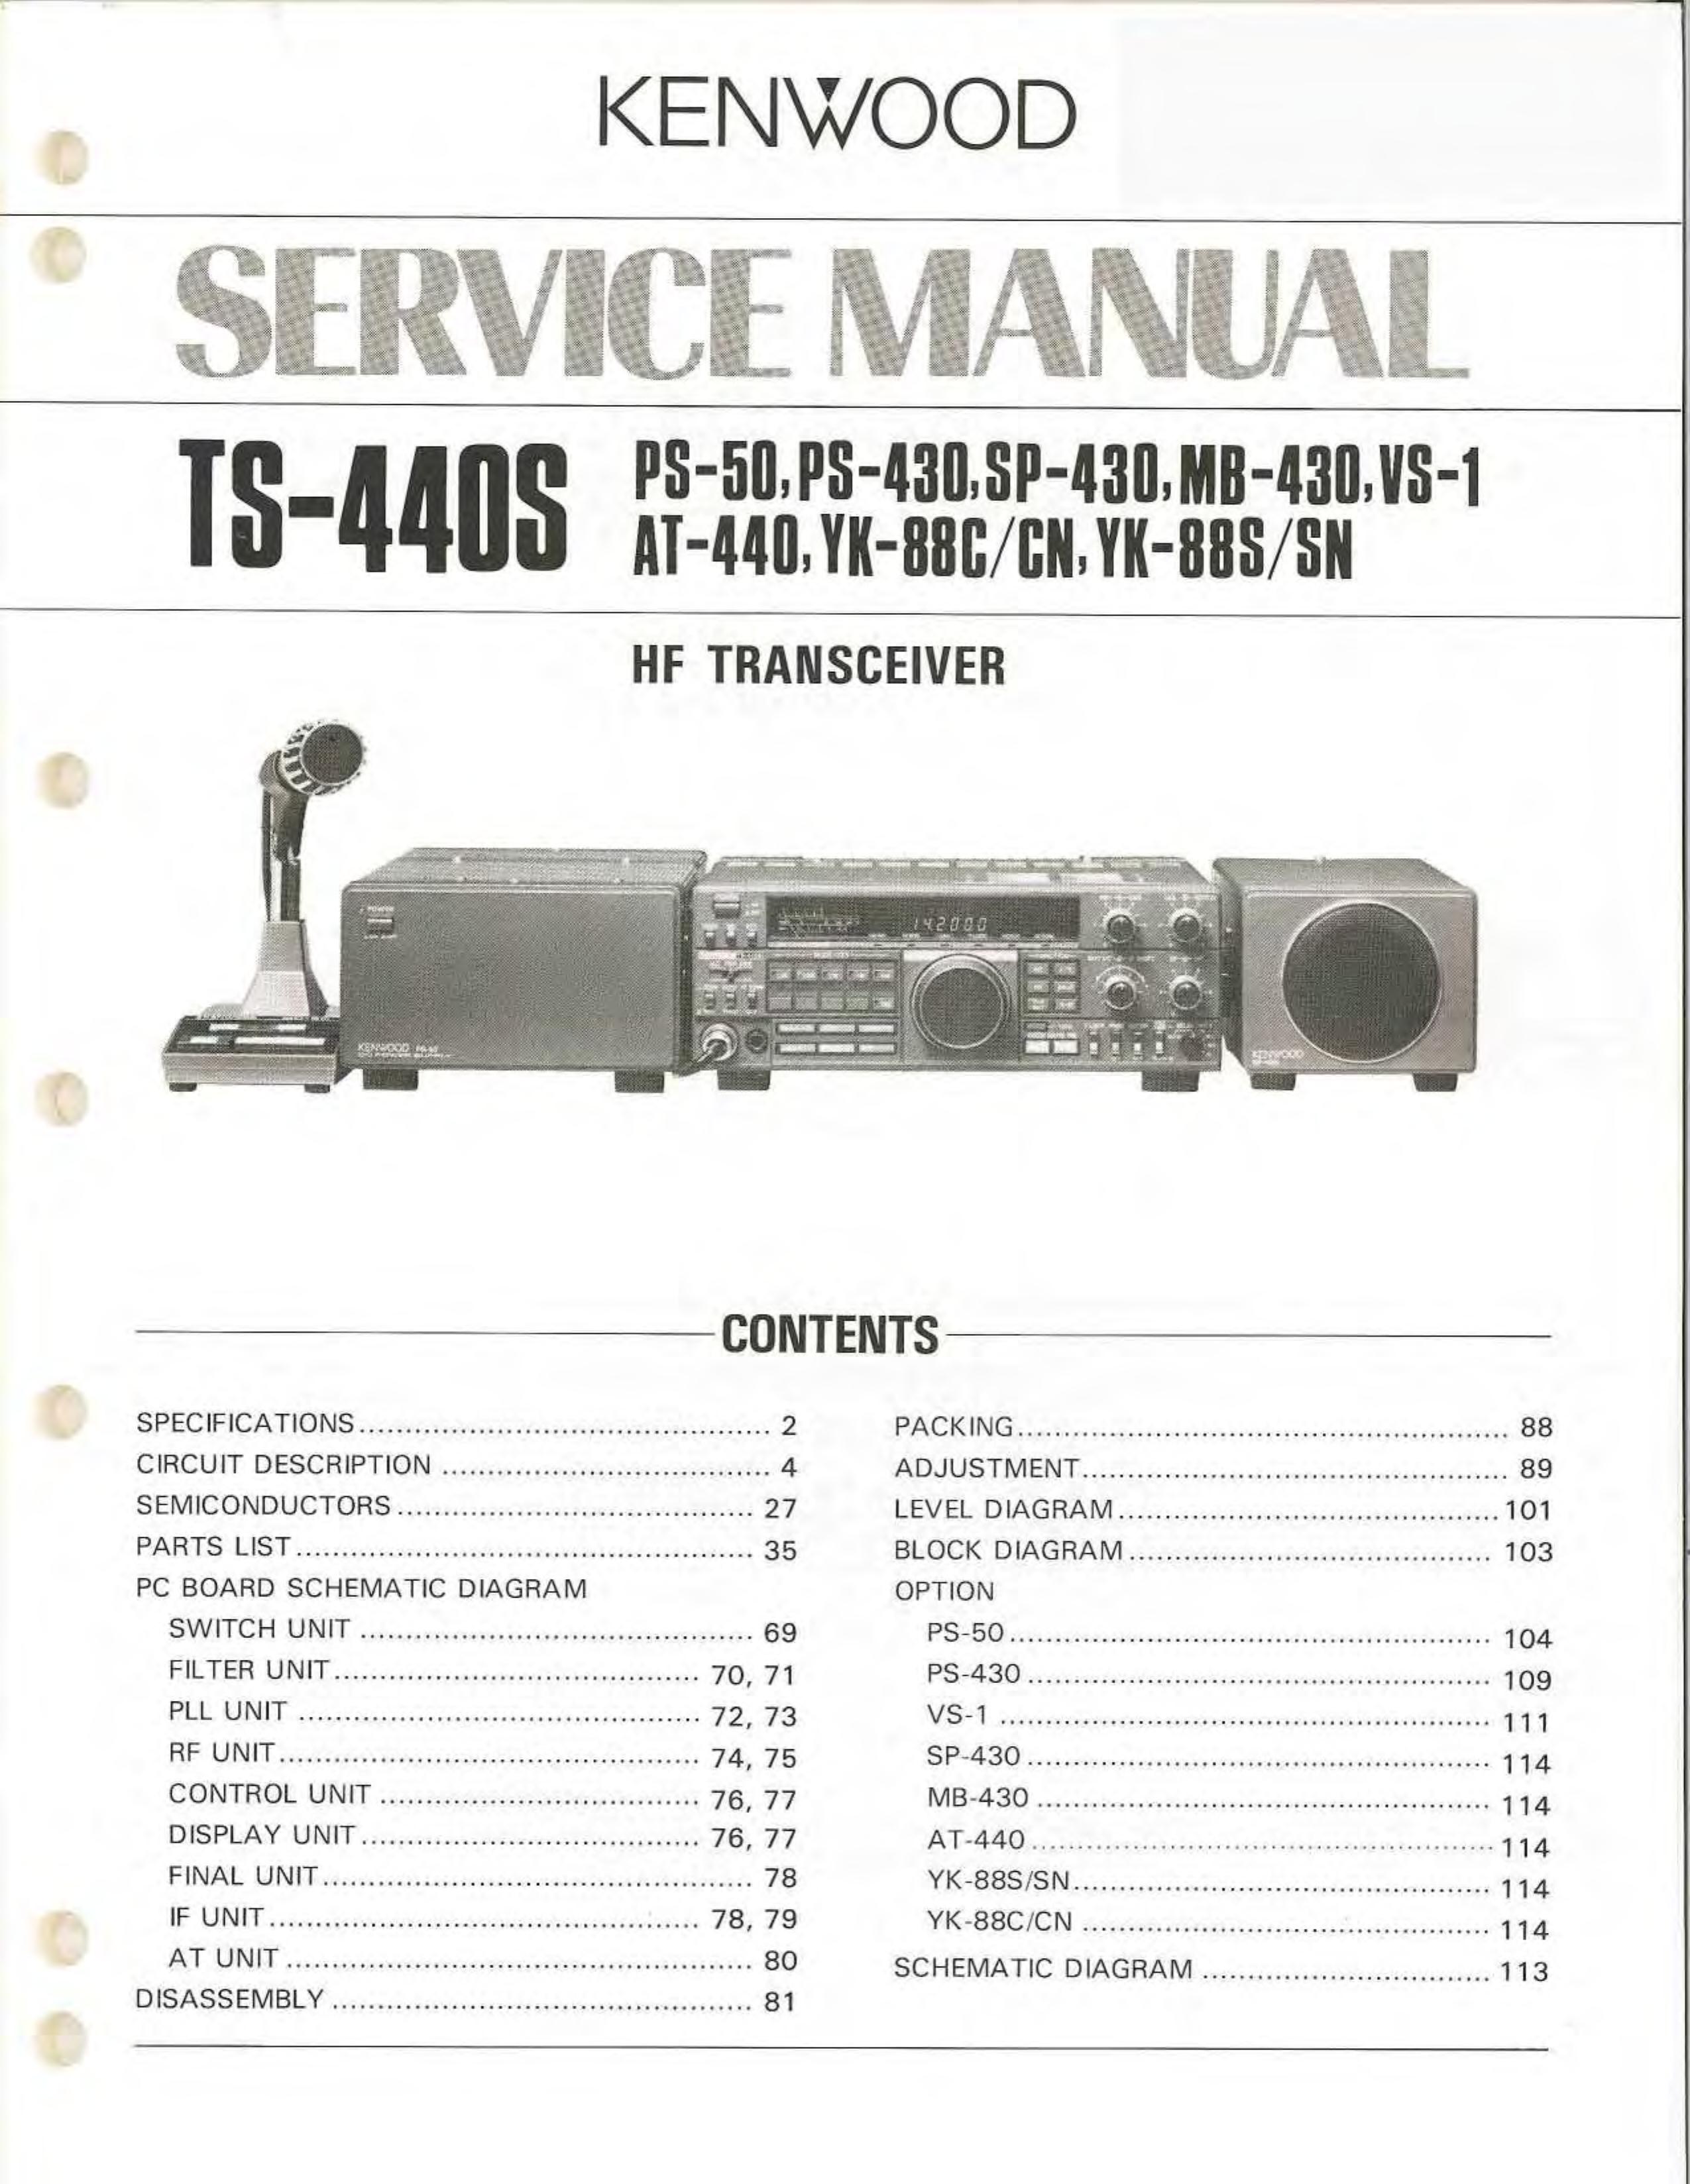 Kenwood MB-430 Marine Radio User Manual